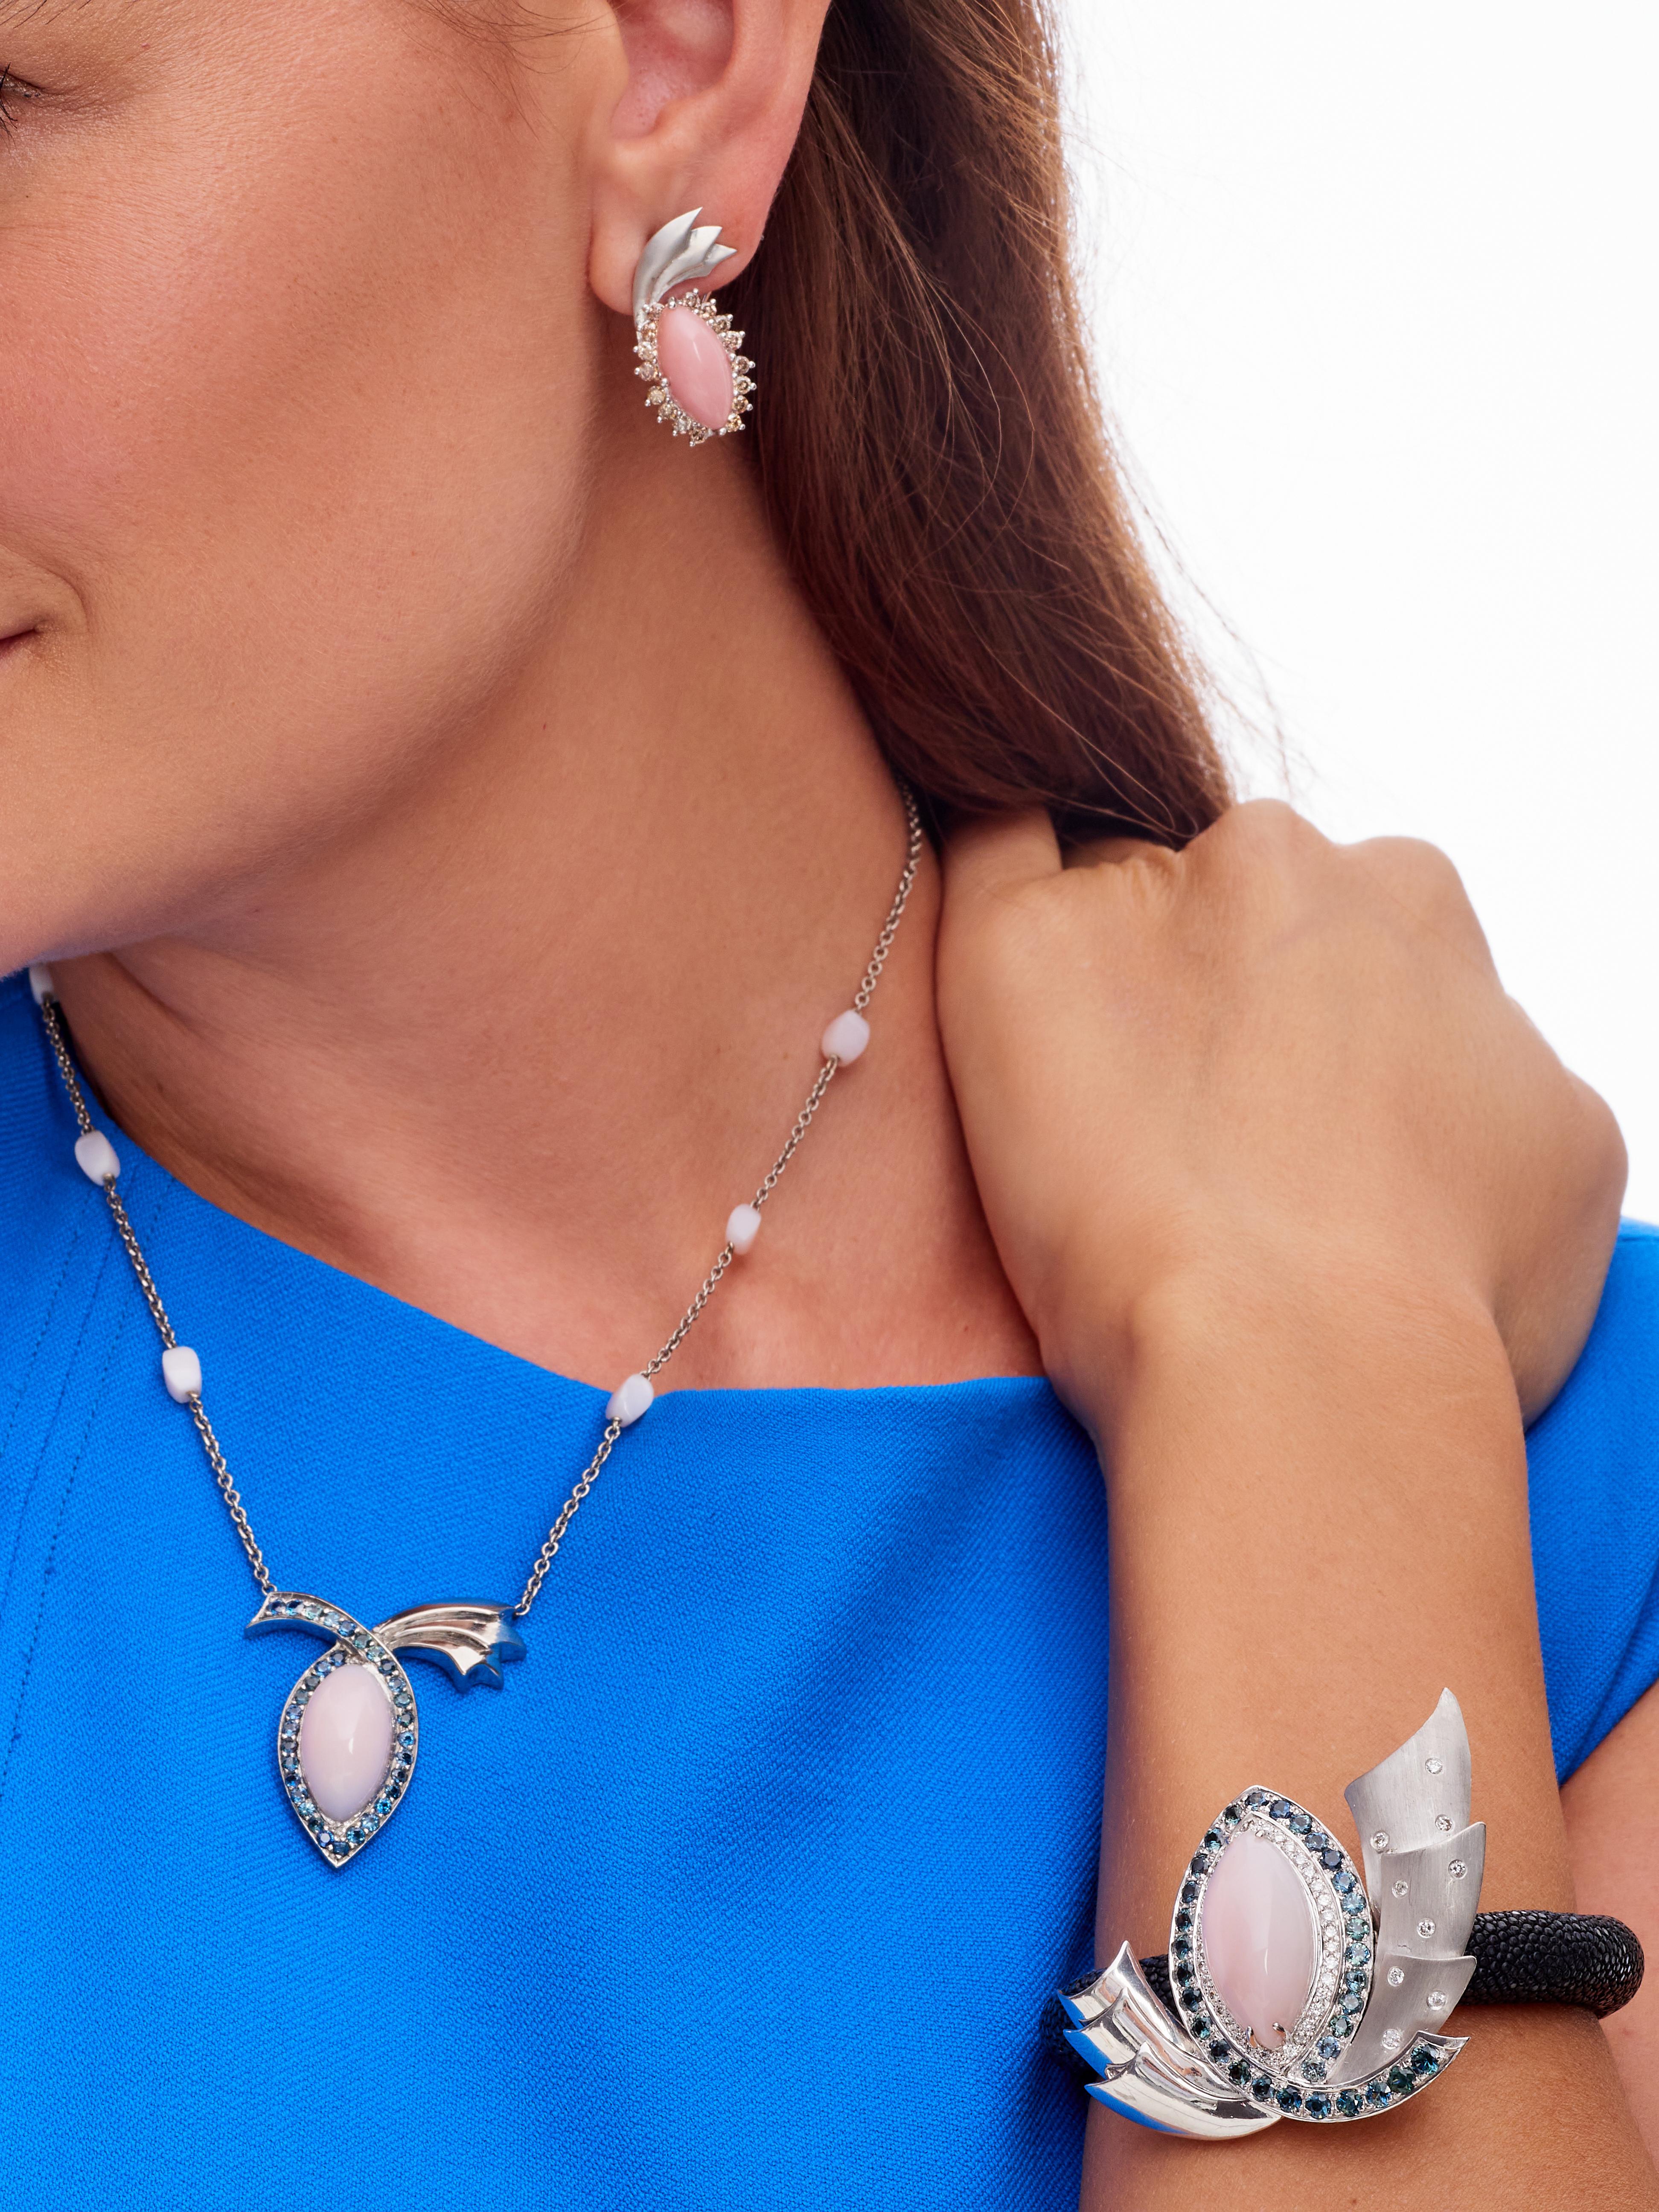 Marquise Cut 11.89 Carat Peruvian Pink Opal Blue Sapphire Pendant Necklace For Sale